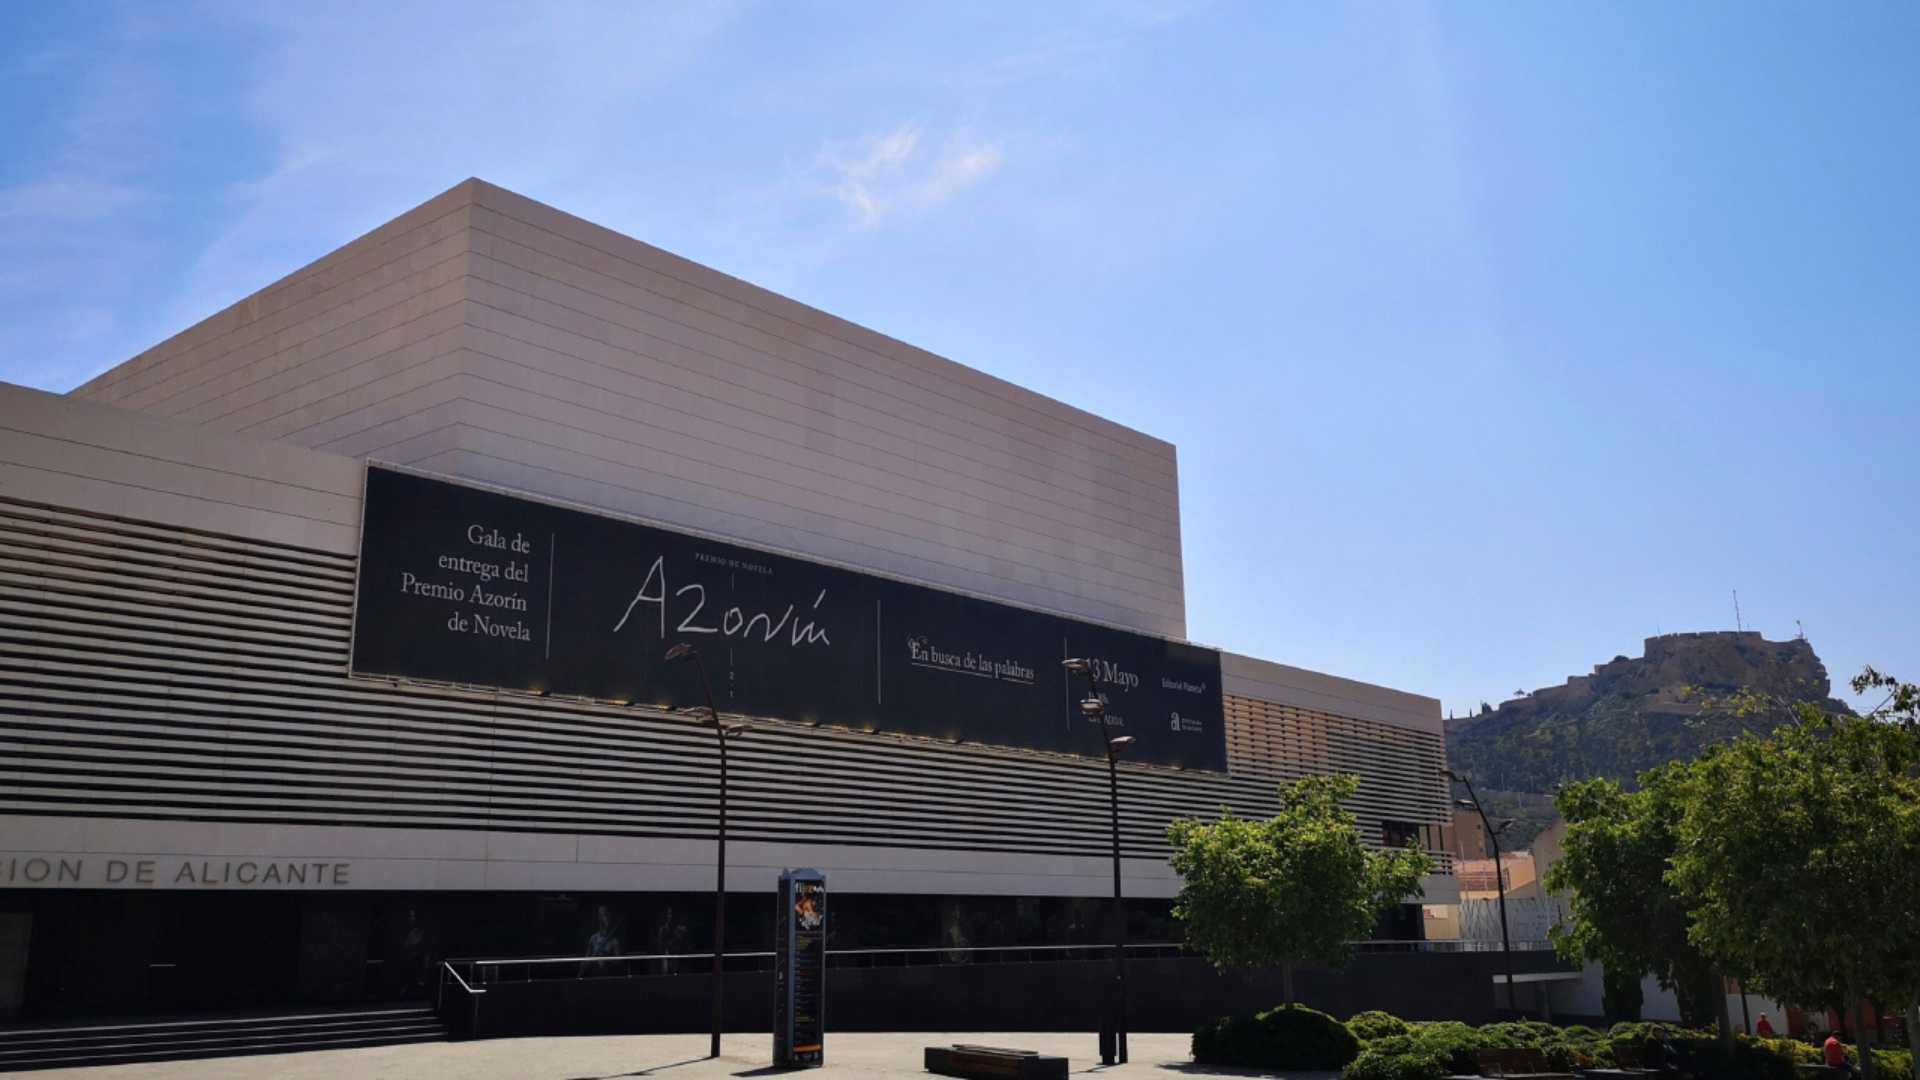 ADDA, Auditorium de la Députation provinciale d’Alicante